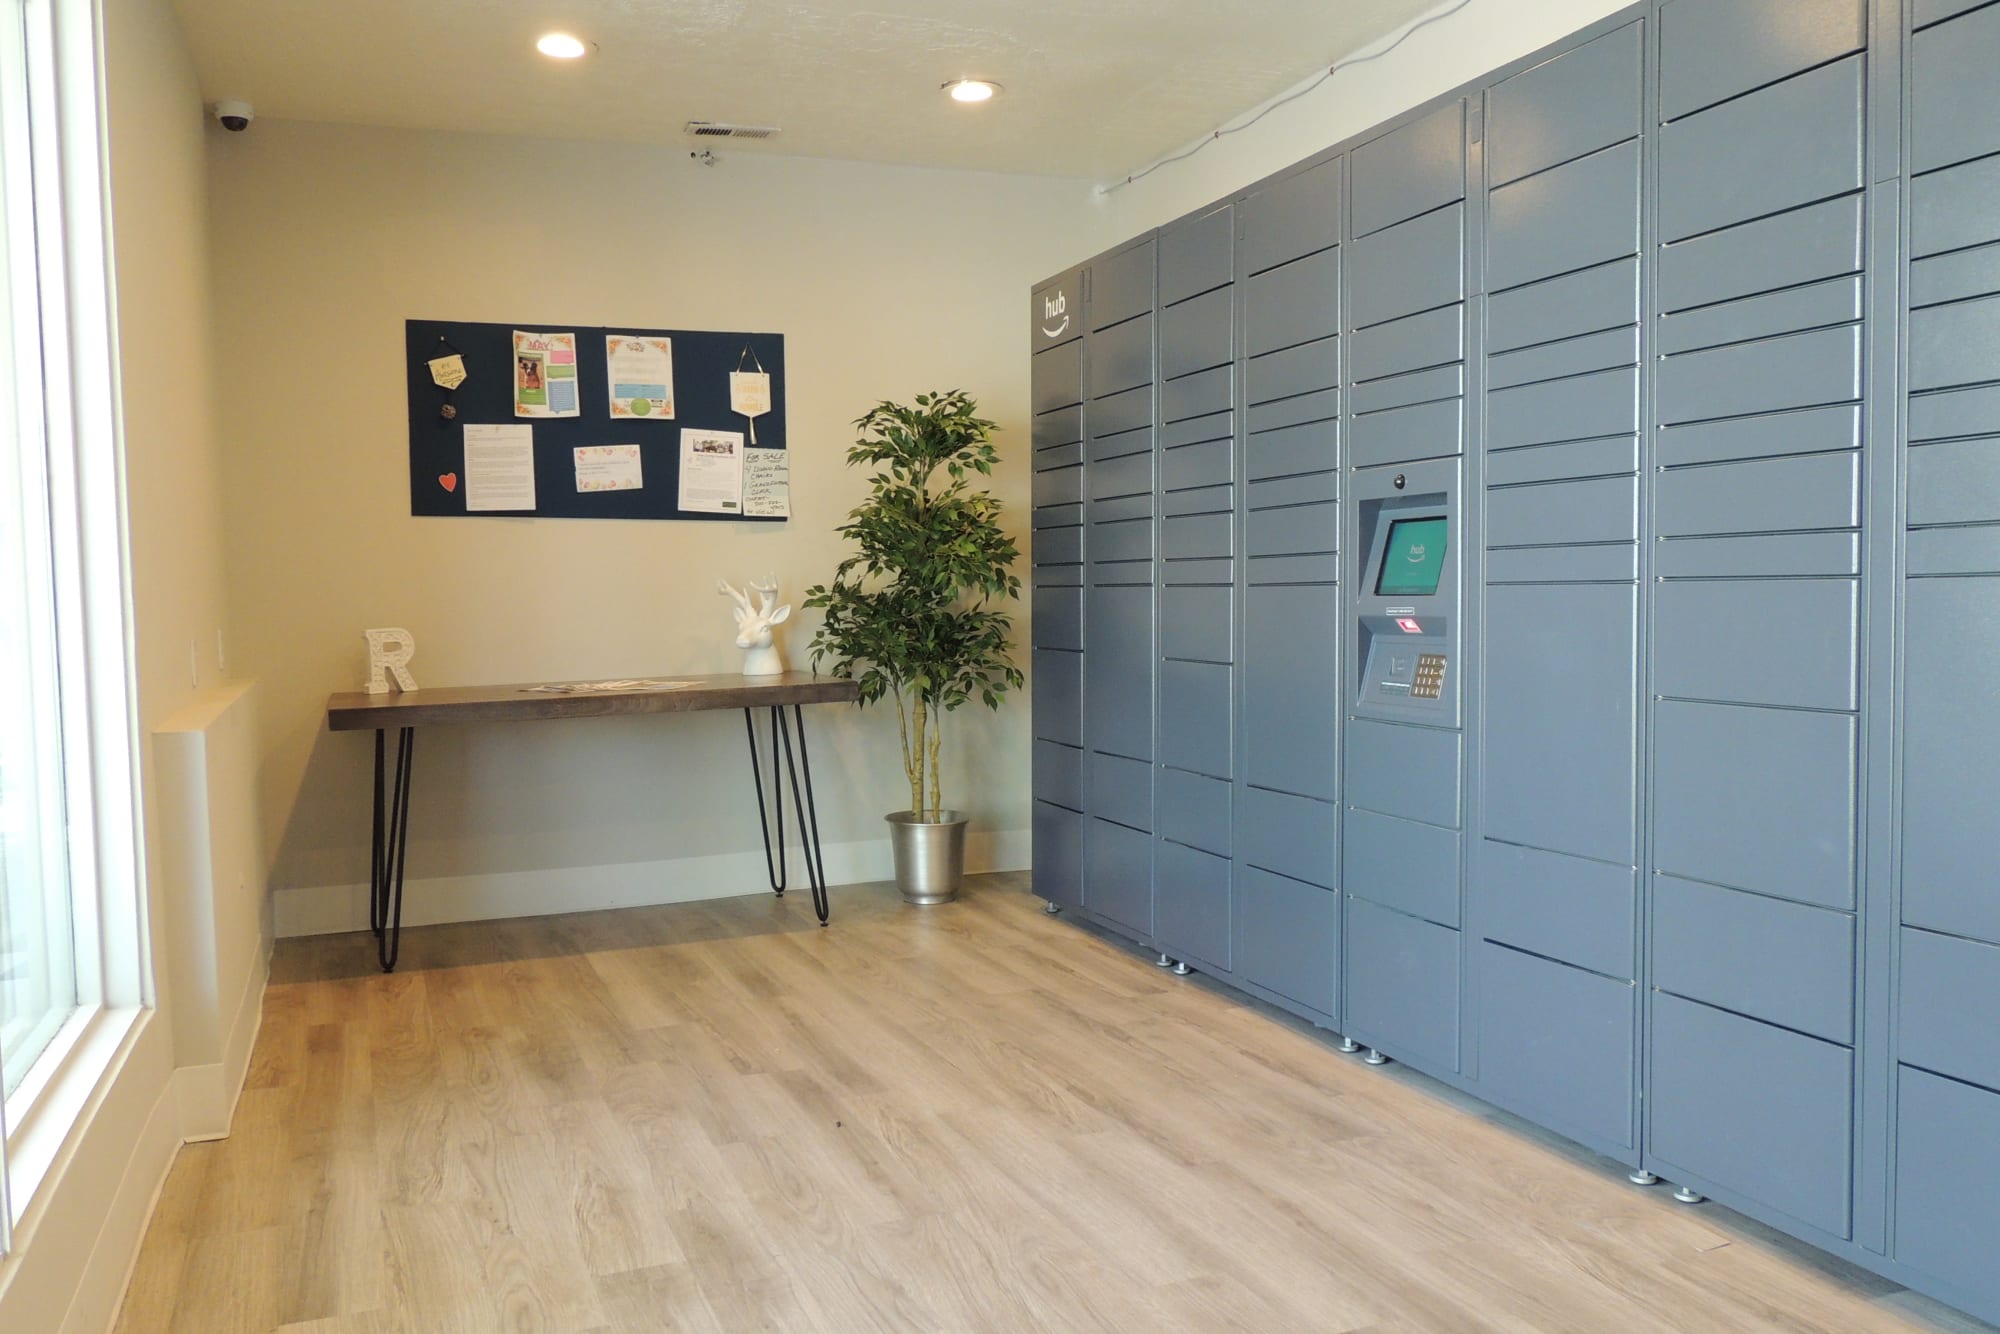 24-hour package lockers with Amazon HUB at Royal Farms Apartments in Salt Lake City, Utah